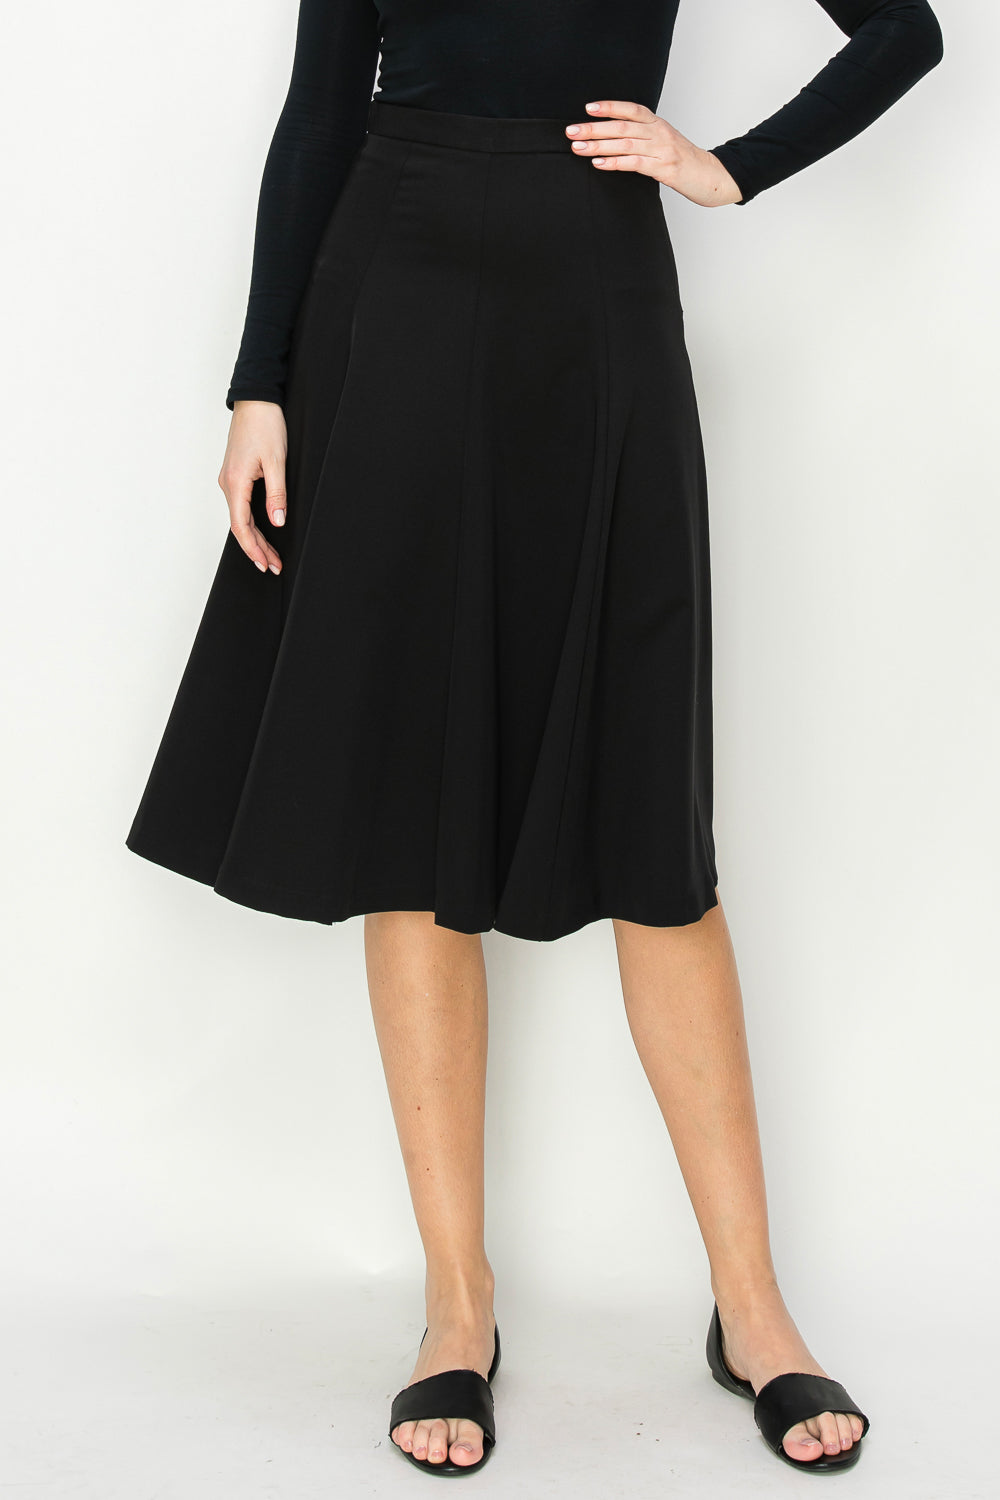  Dress Fabric Knee Length Paneled Skirt With Side Zip Closure